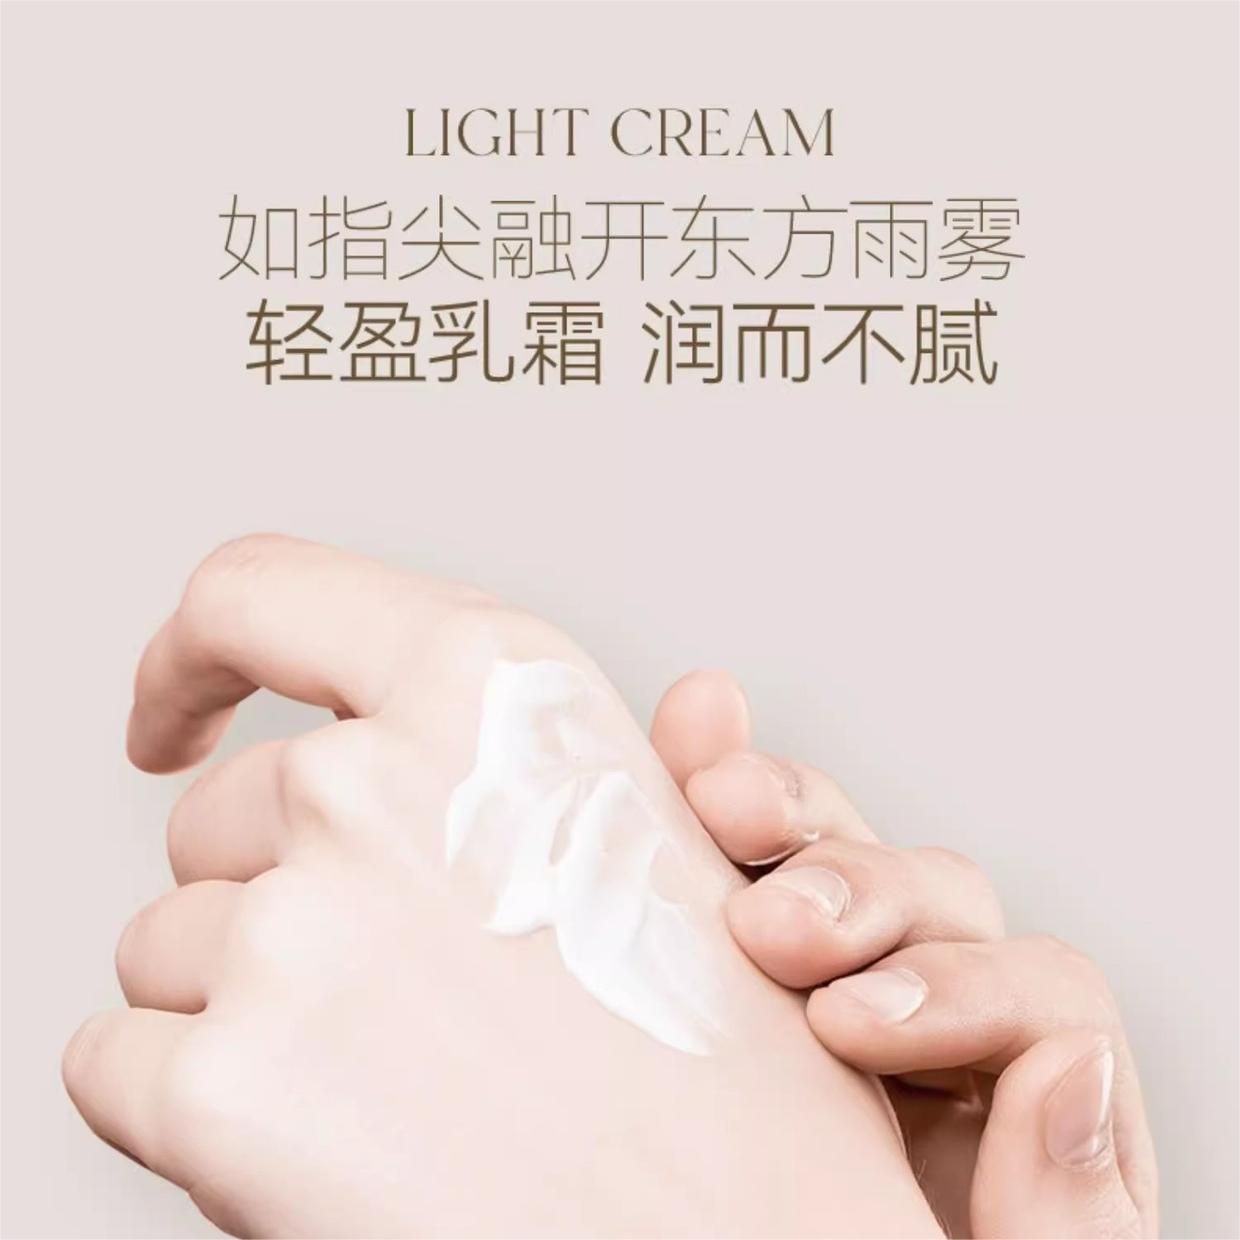 UNNY Refreshing Hydrating Fragrance Hand Cream 58g 悠宜沁润补水香氛护手霜